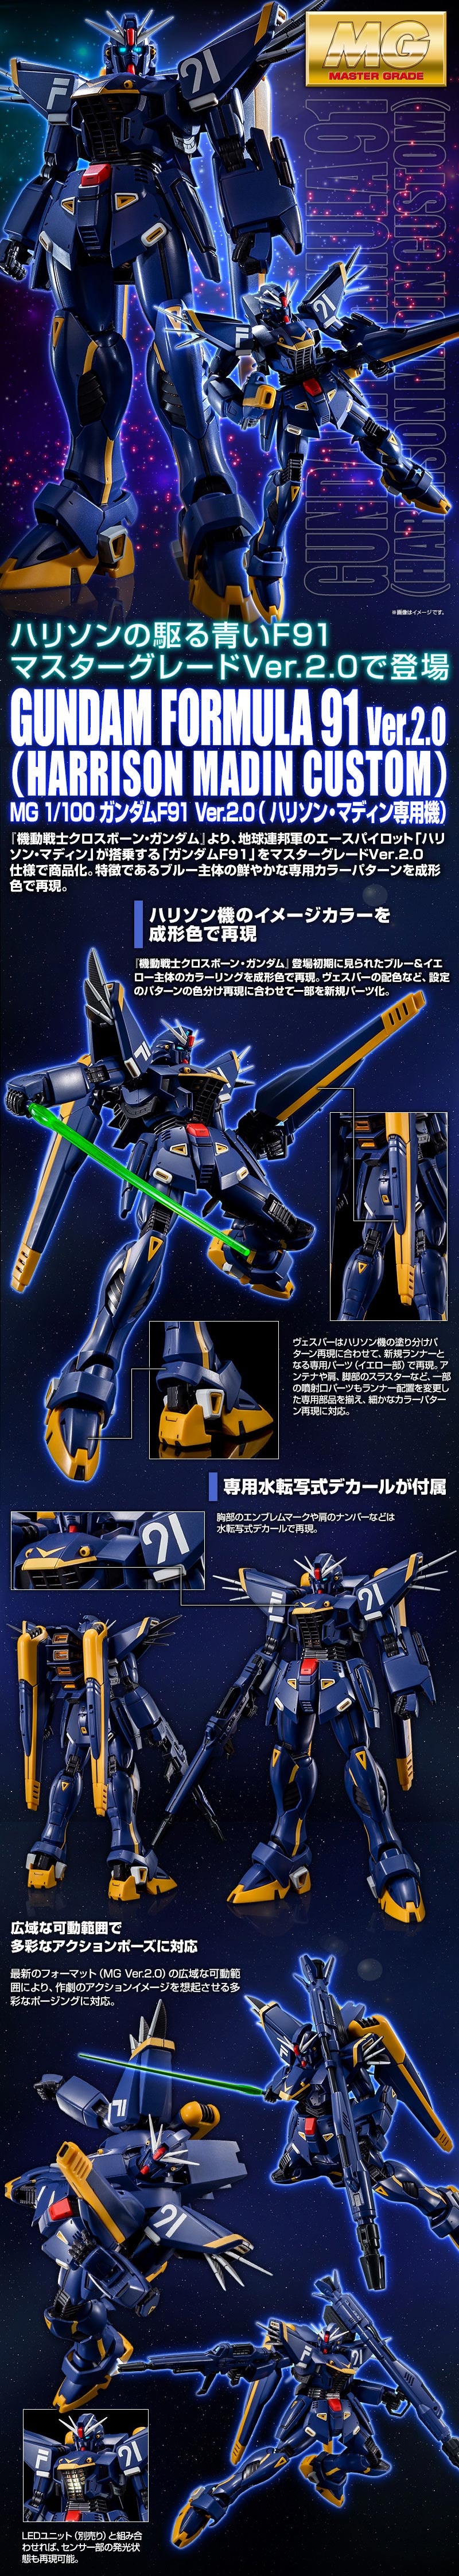 MG F-91 Gundam F91 Ver 2.0 (Harrison Custom) Details